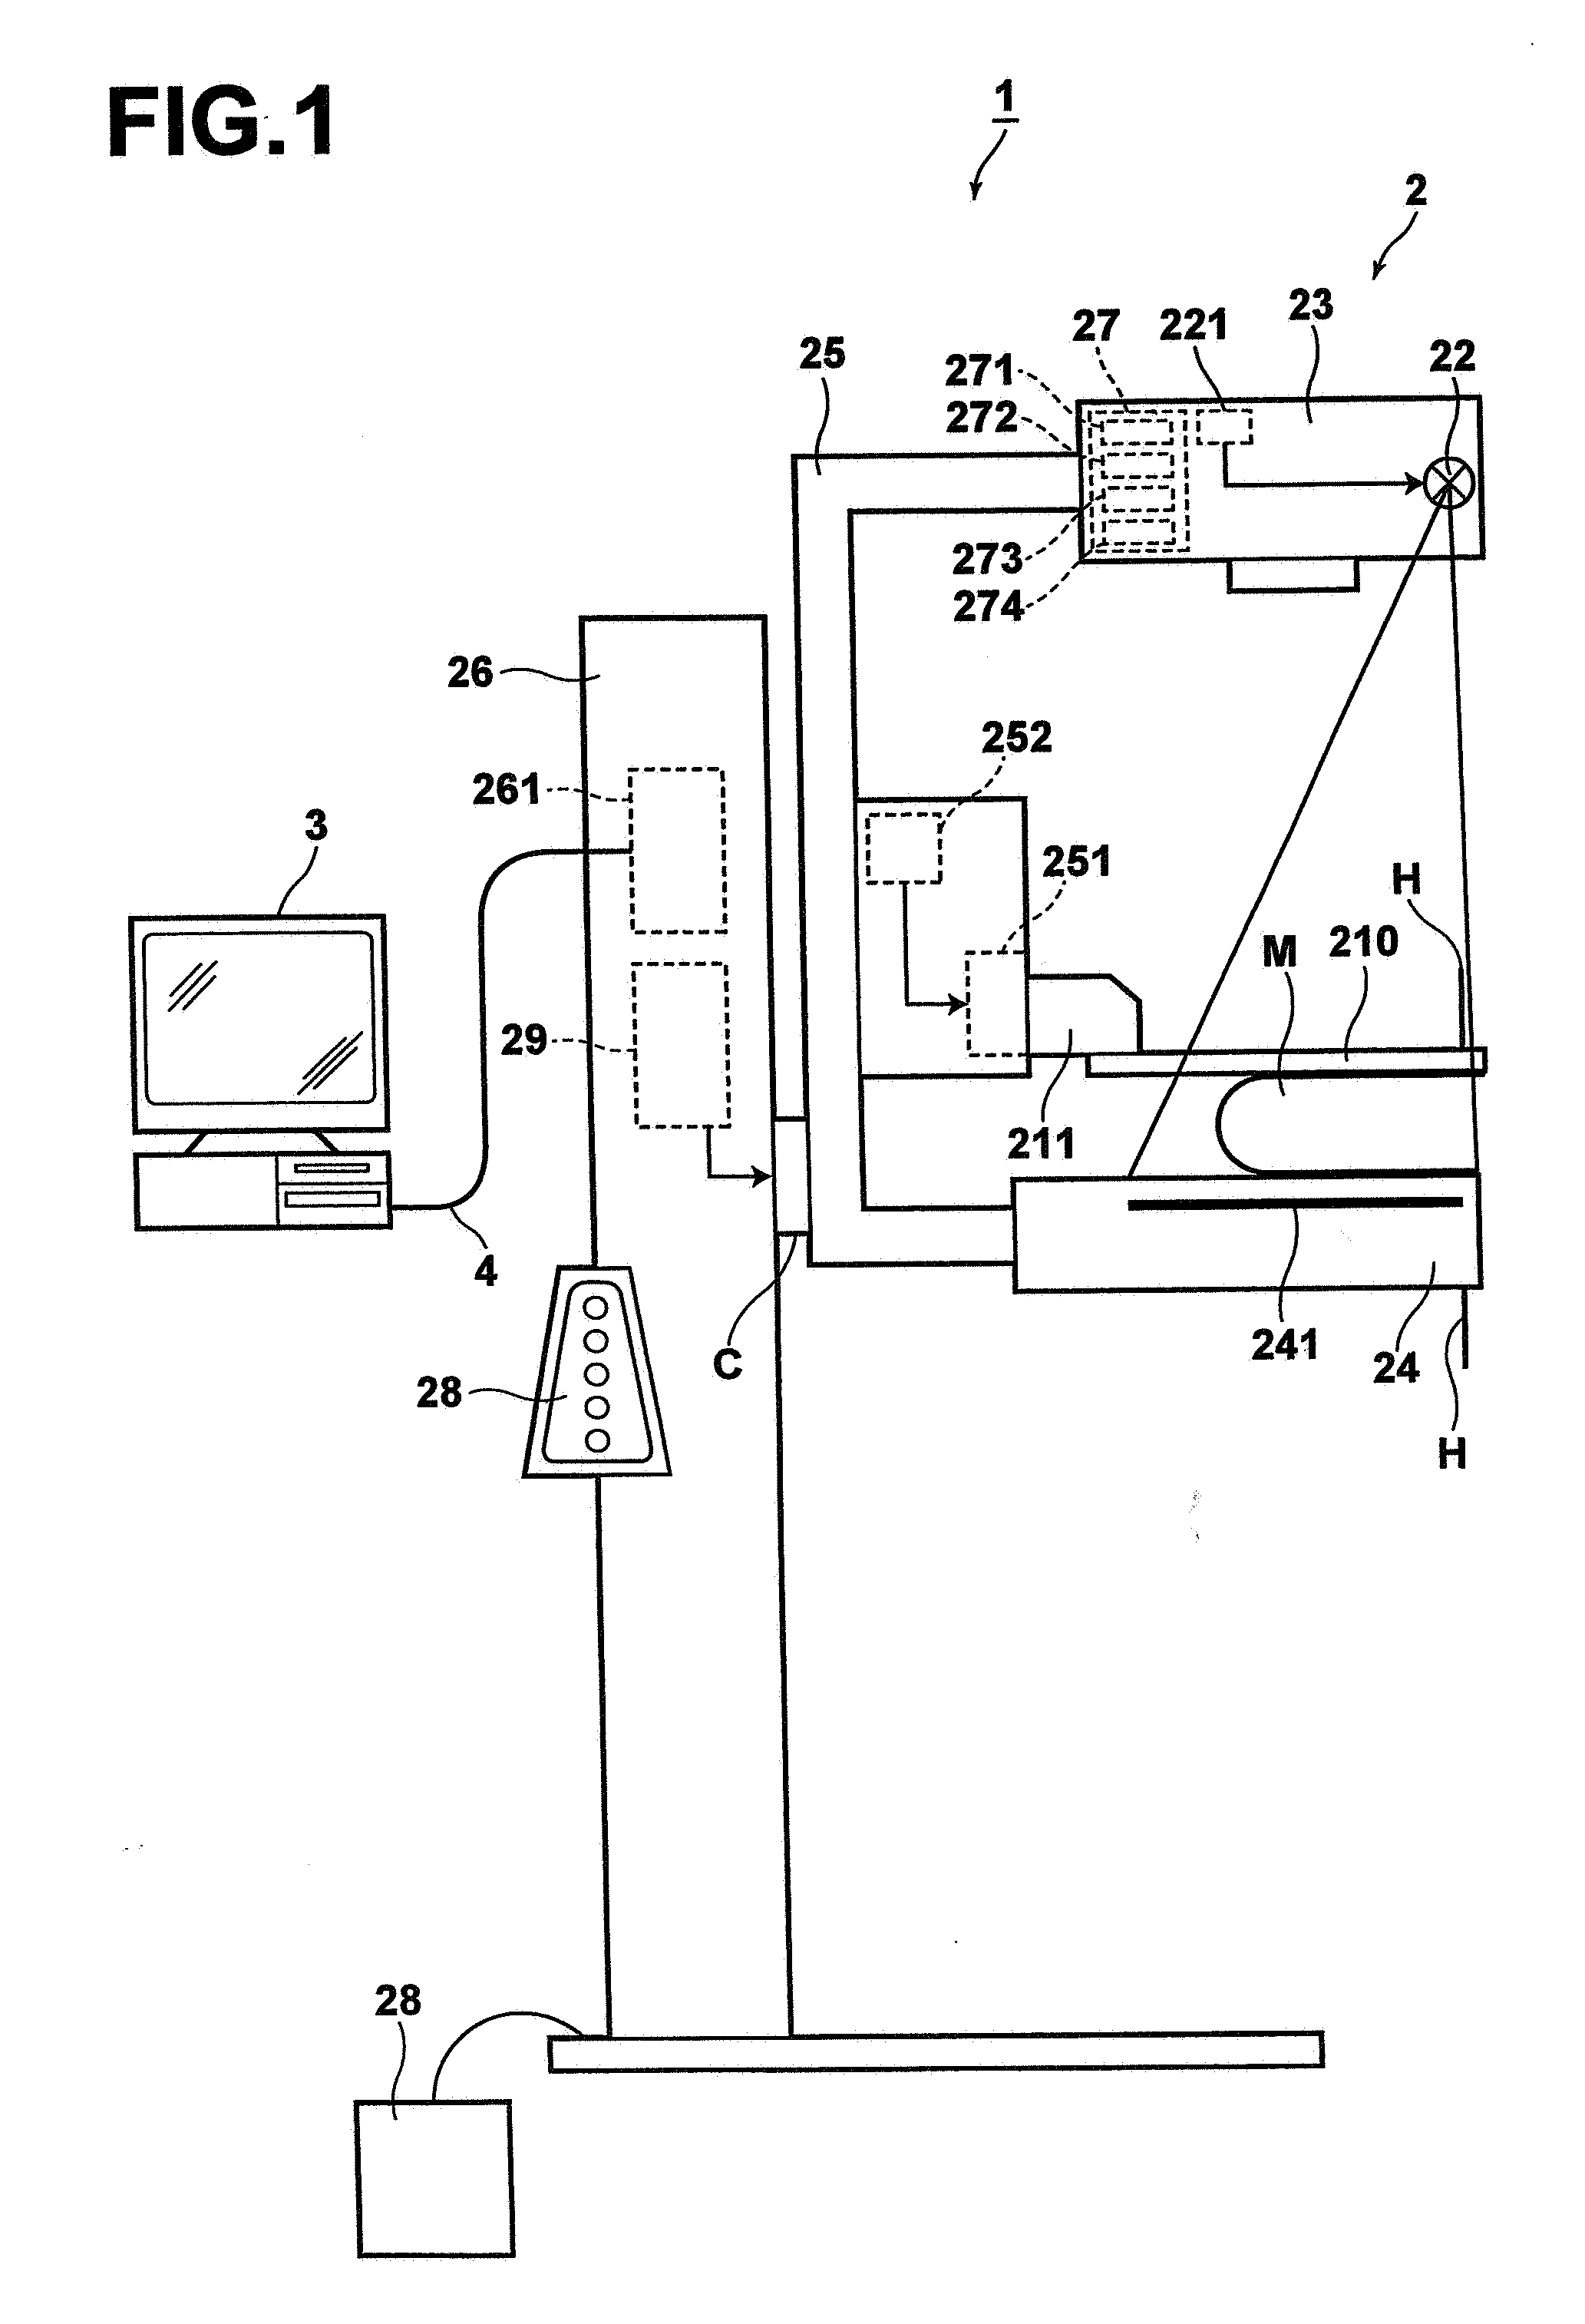 Tomographic image obtainment apparatus and method